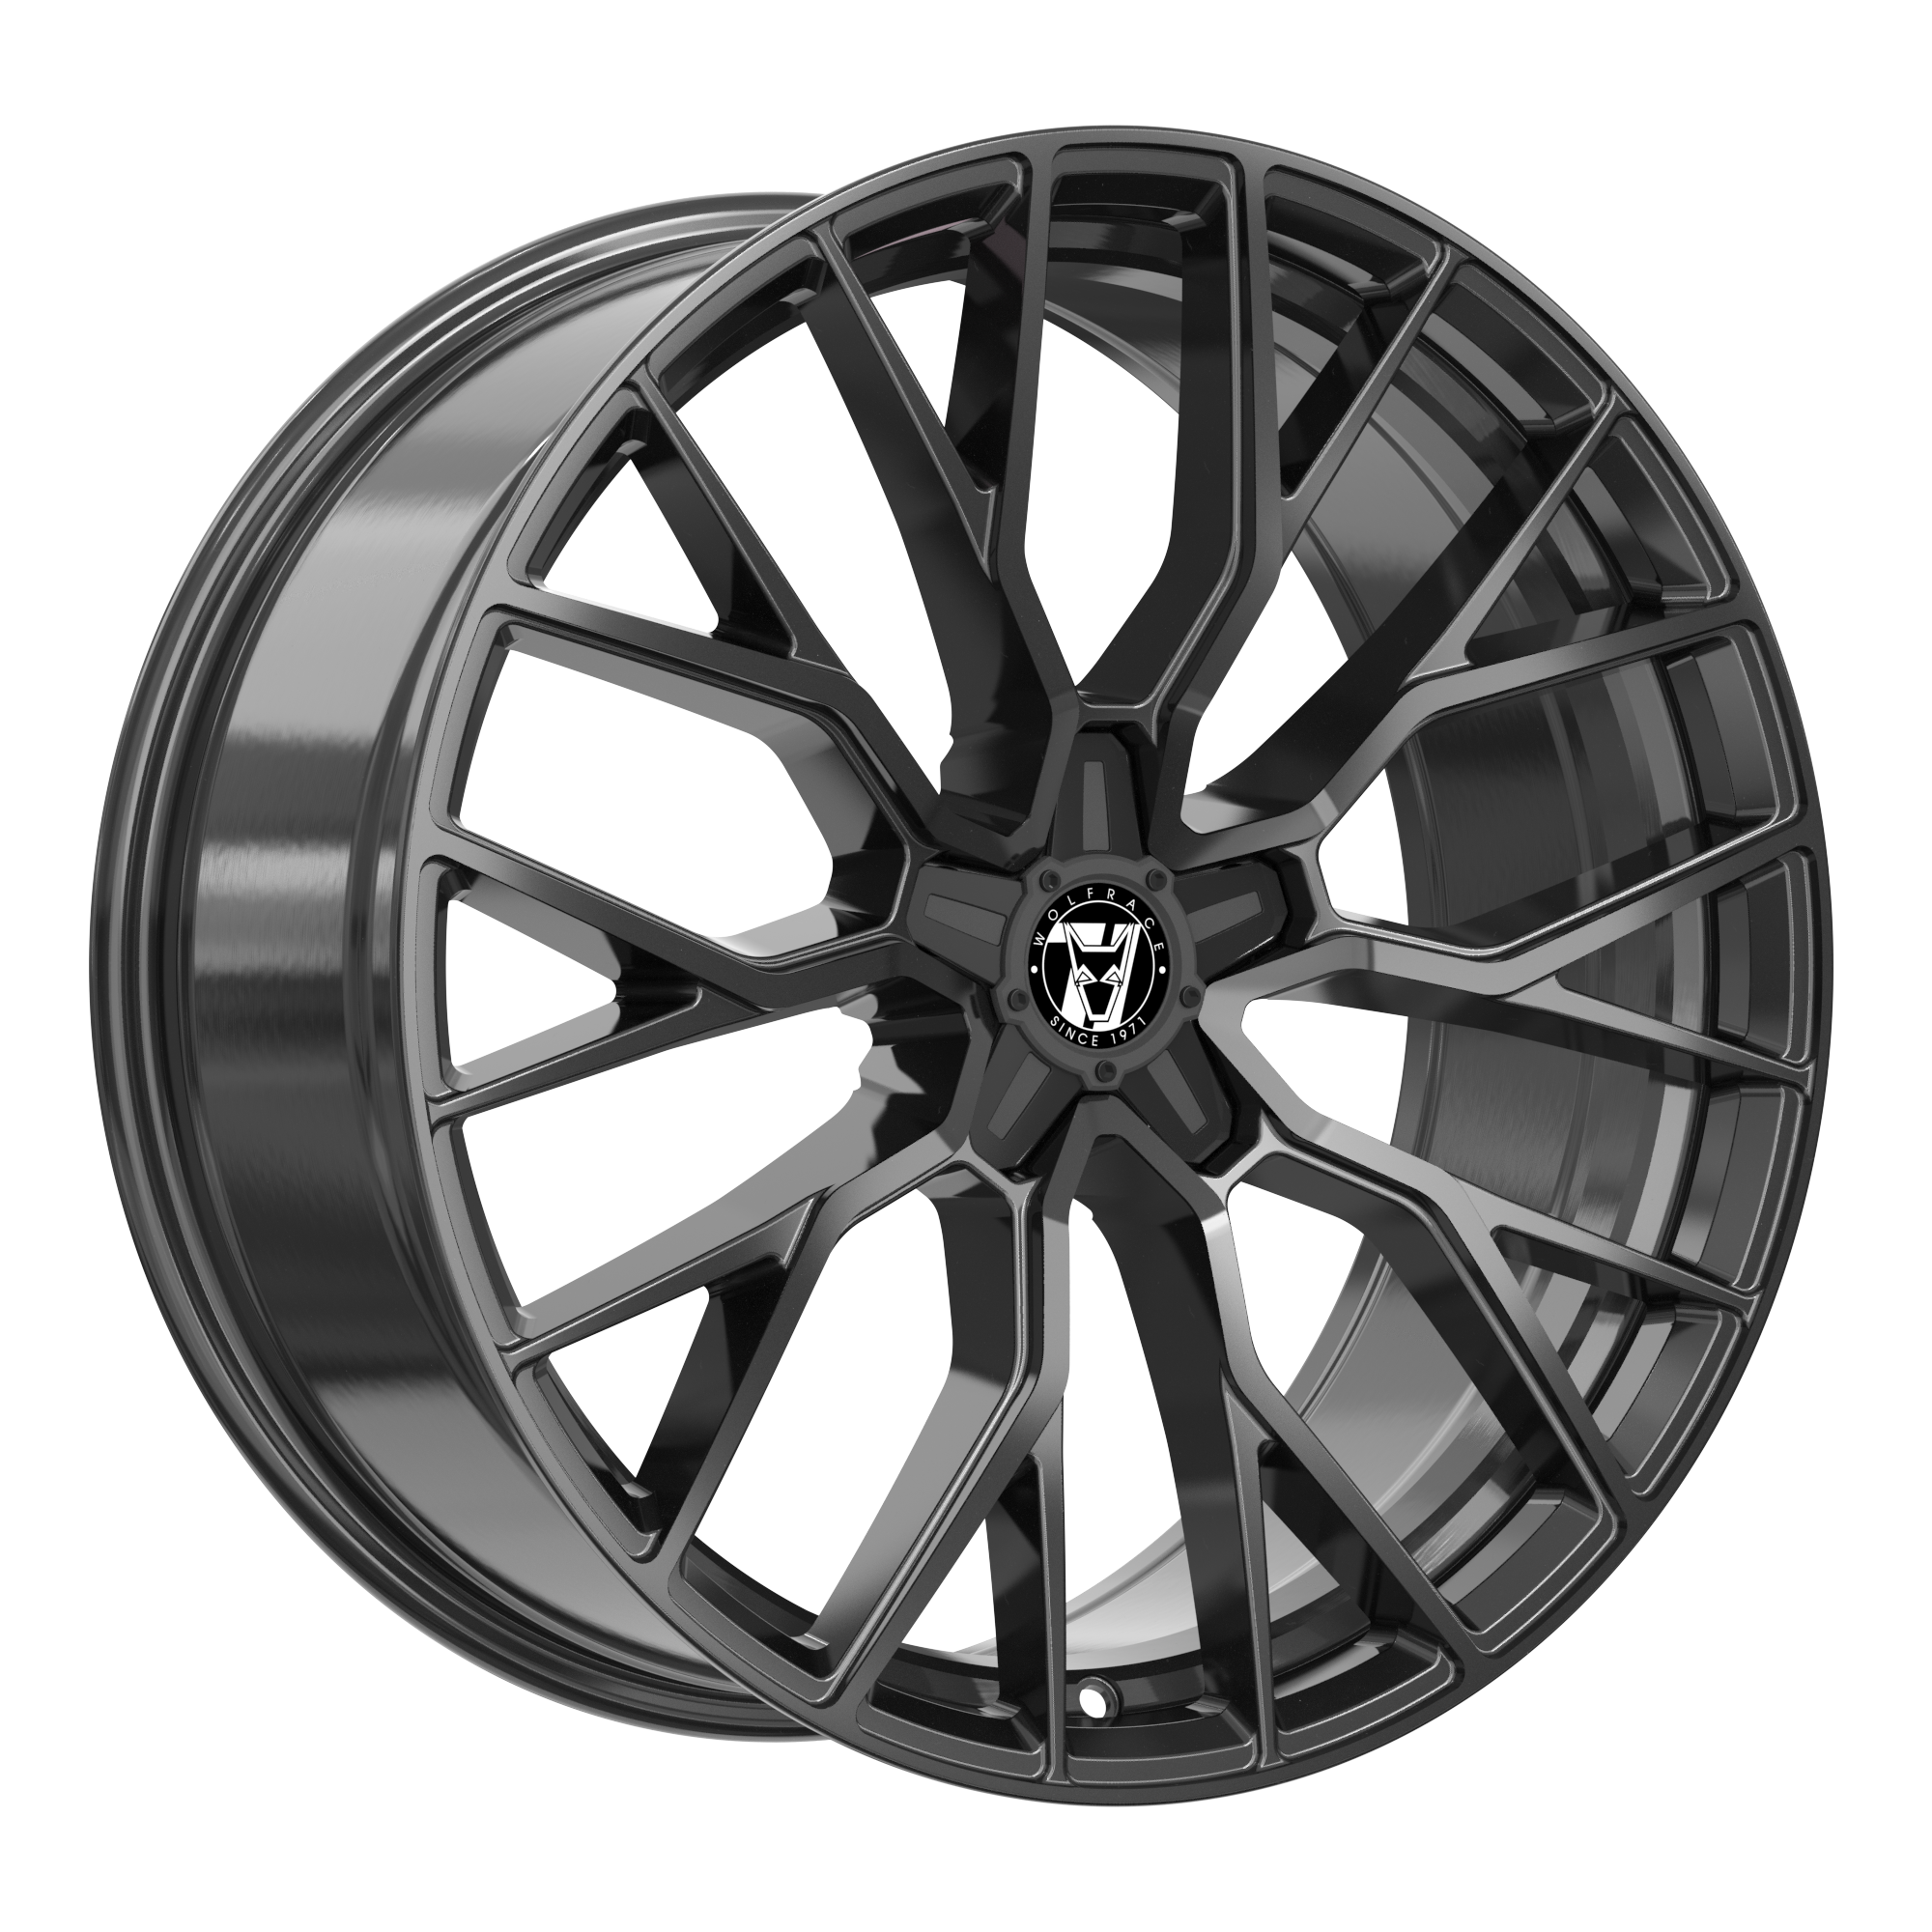 Demon Wheels 71 Munich GTR Black Edition [9.5x22] -5x108- ET 40